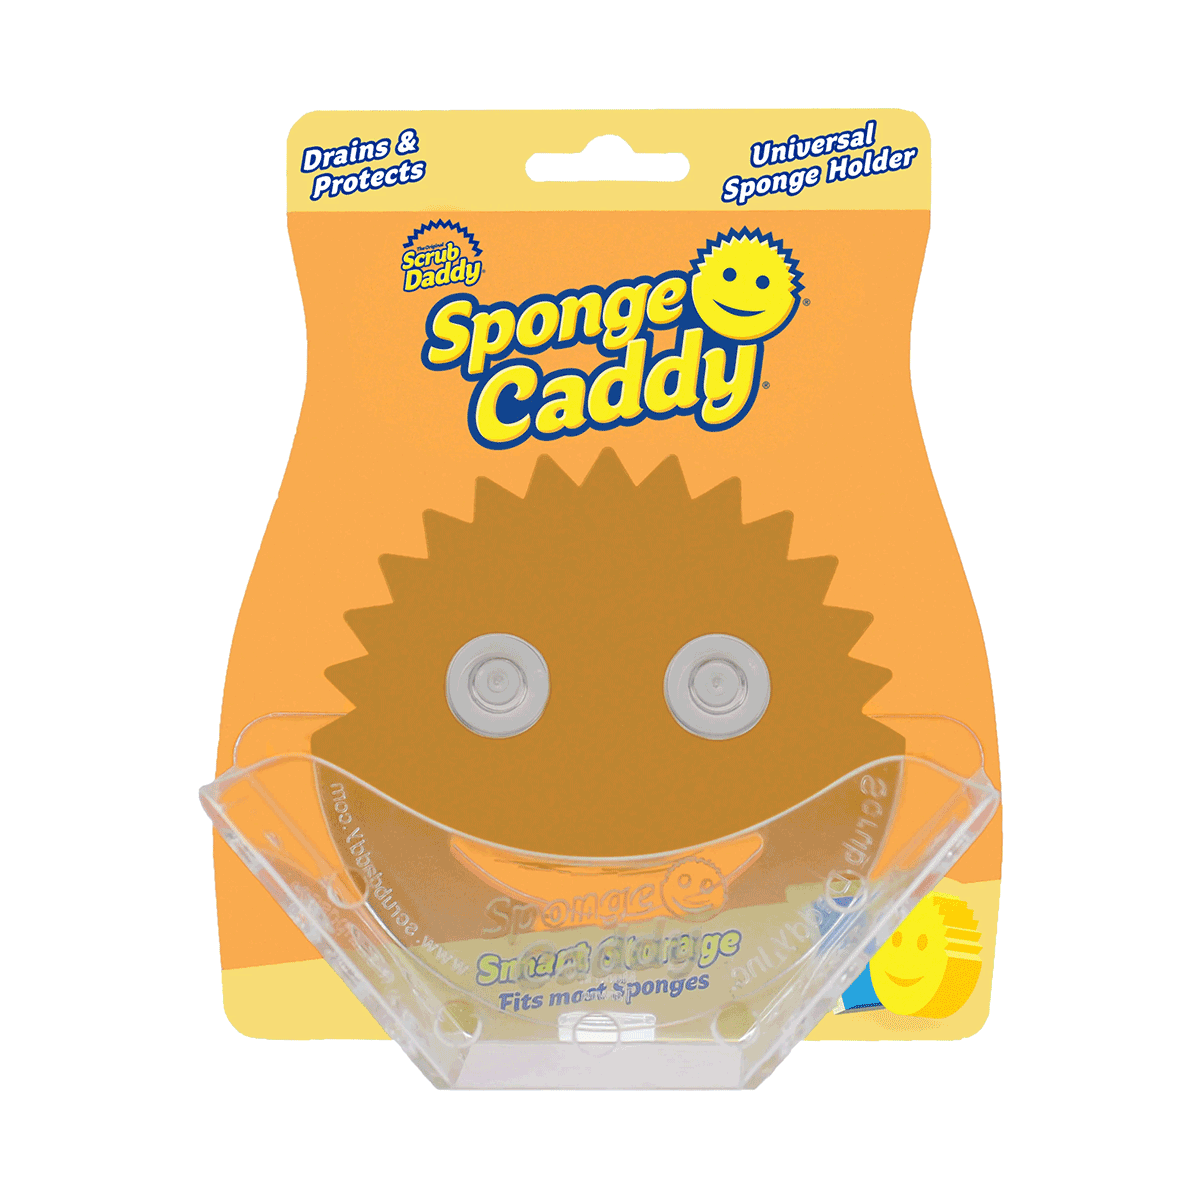 Sponge Caddy, Porta Esponjas Universal Scrub Daddy, la esponja favorita de USA, 1 unidad